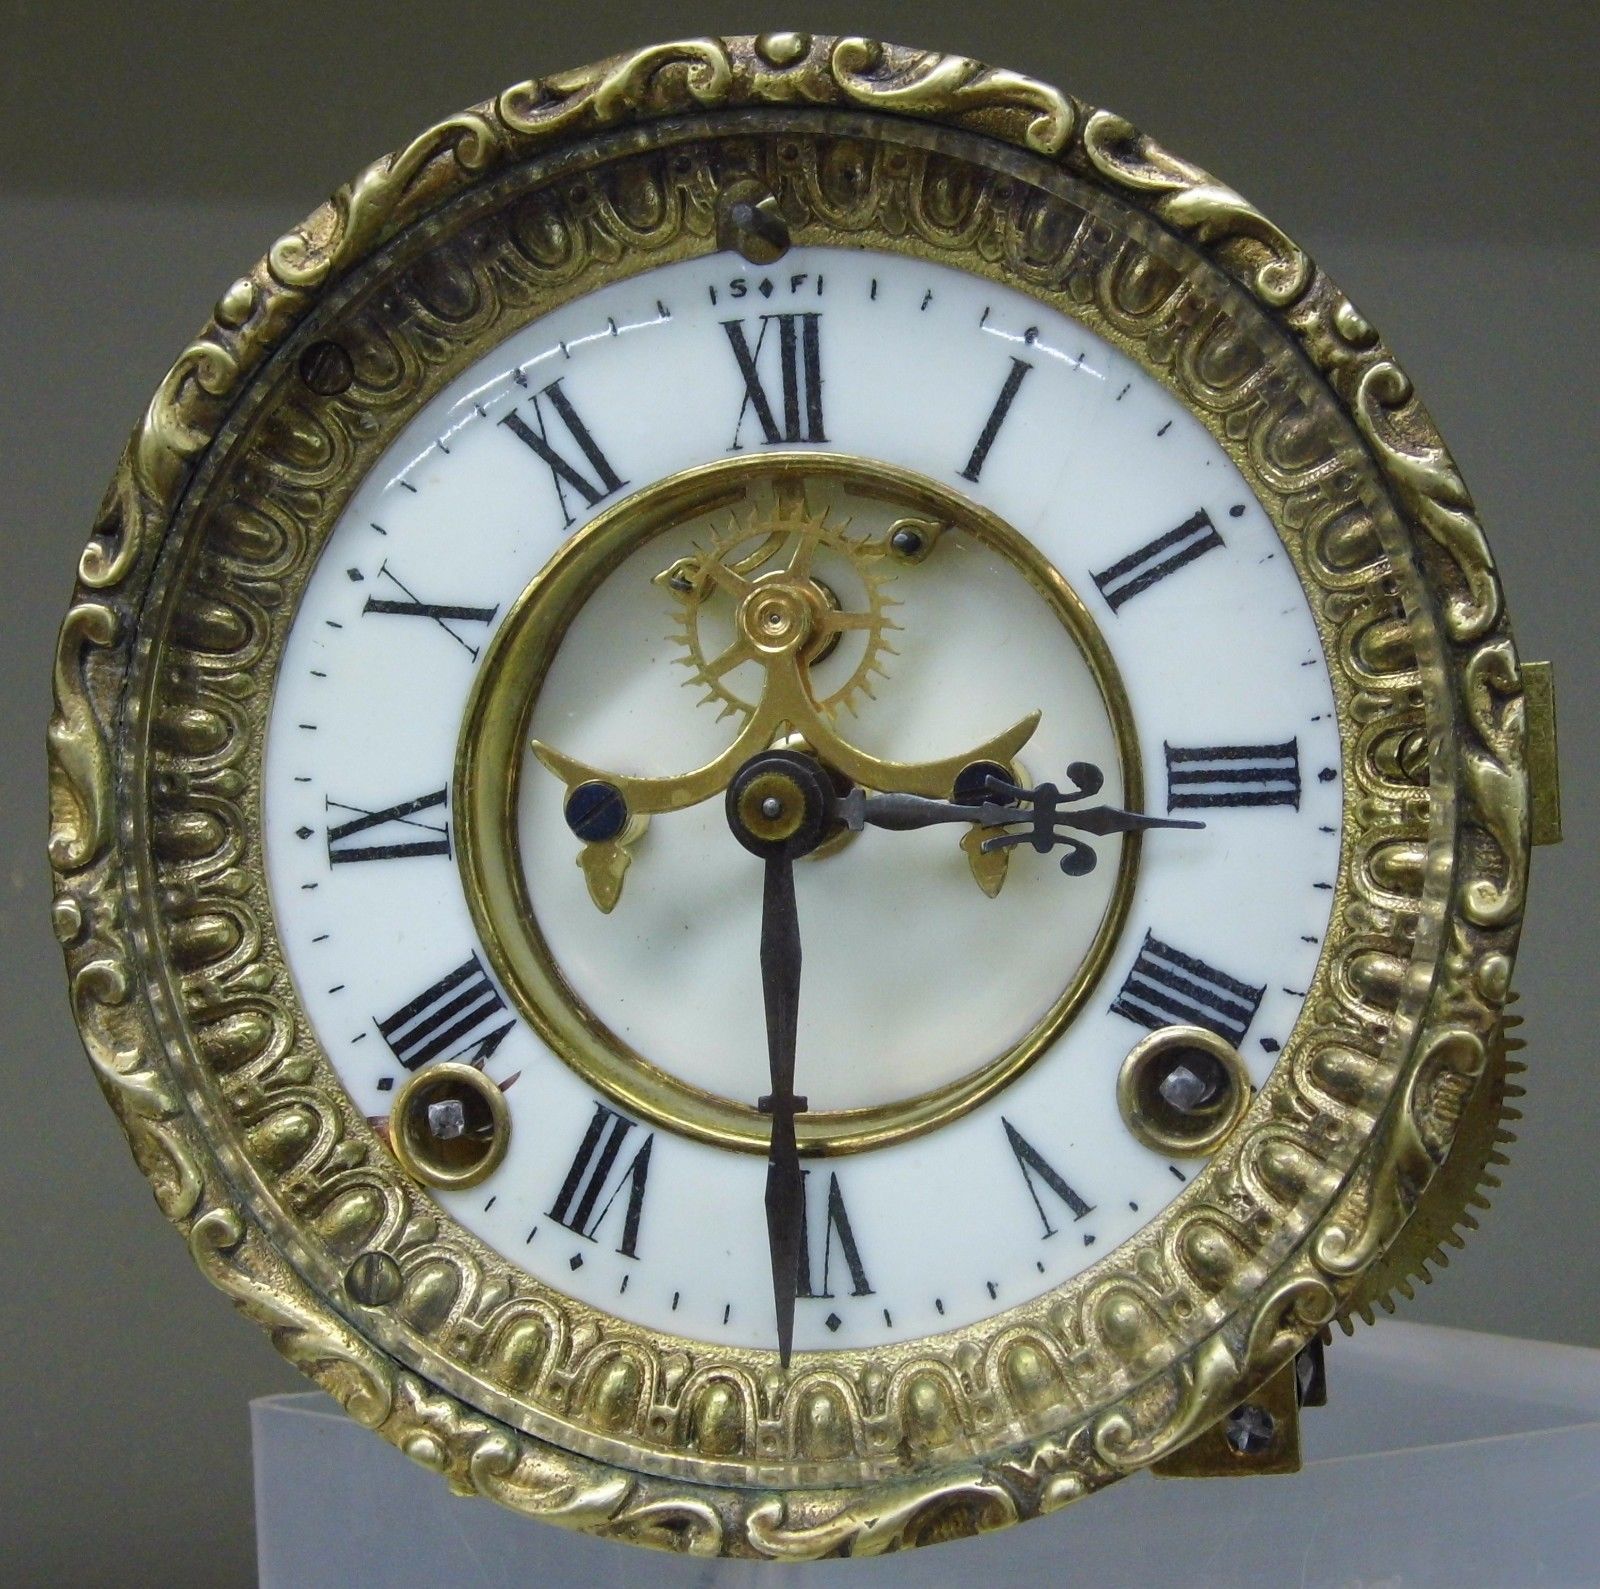 Antique Ansonia Open Escapement Clock Movement Parts Repair Time Strike 8 Day Antique Price Guide Details Page